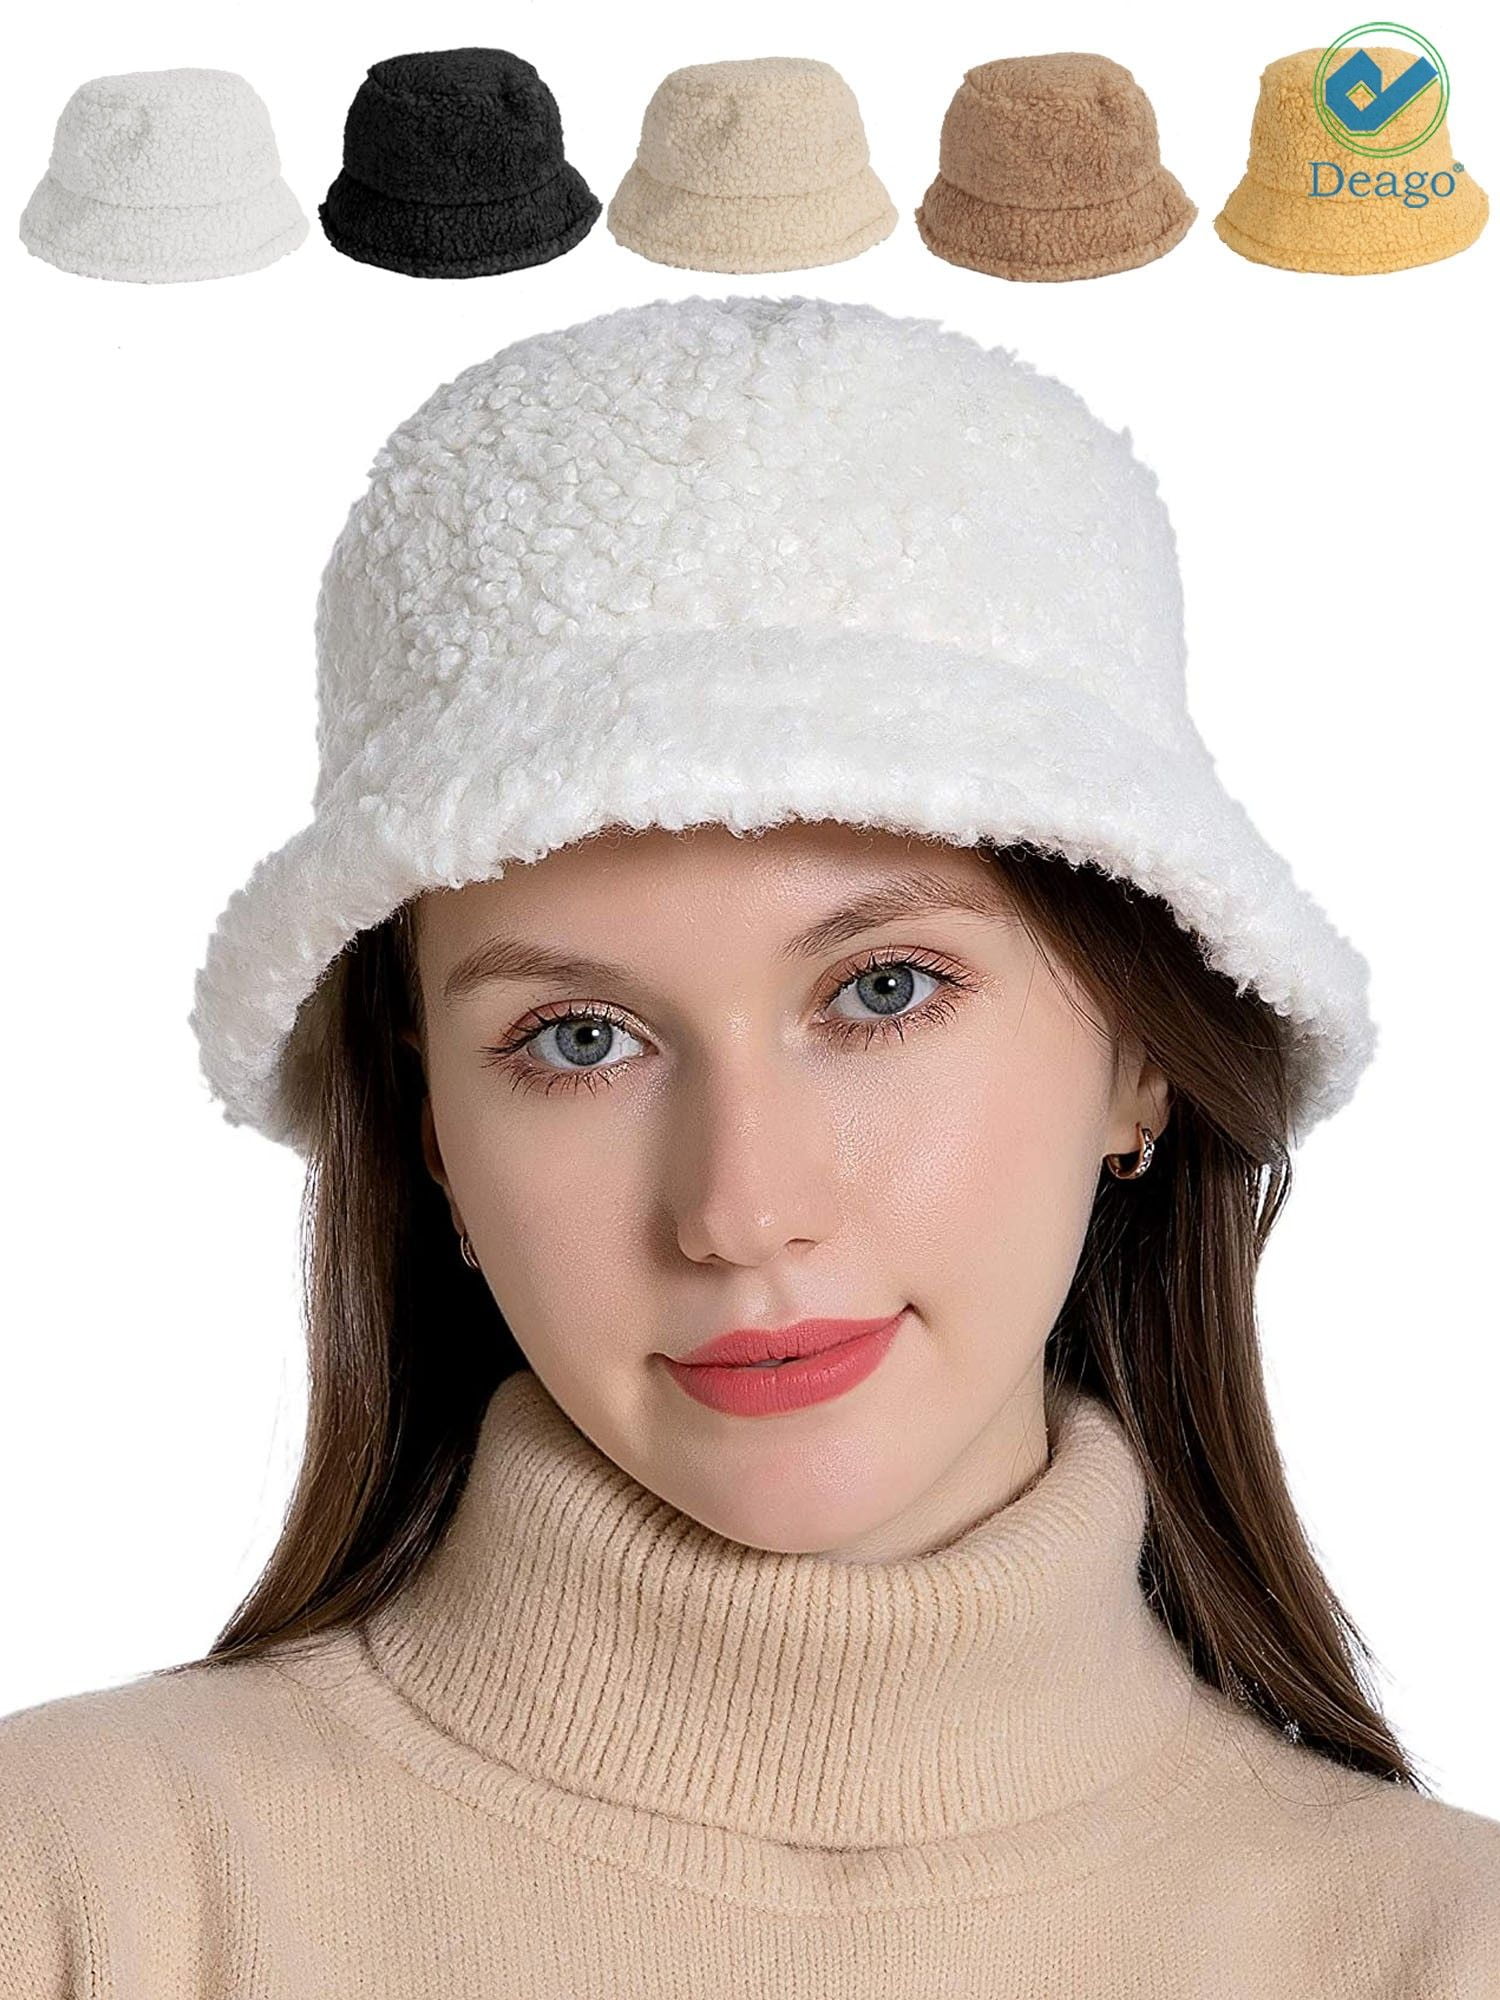 wool caps for women